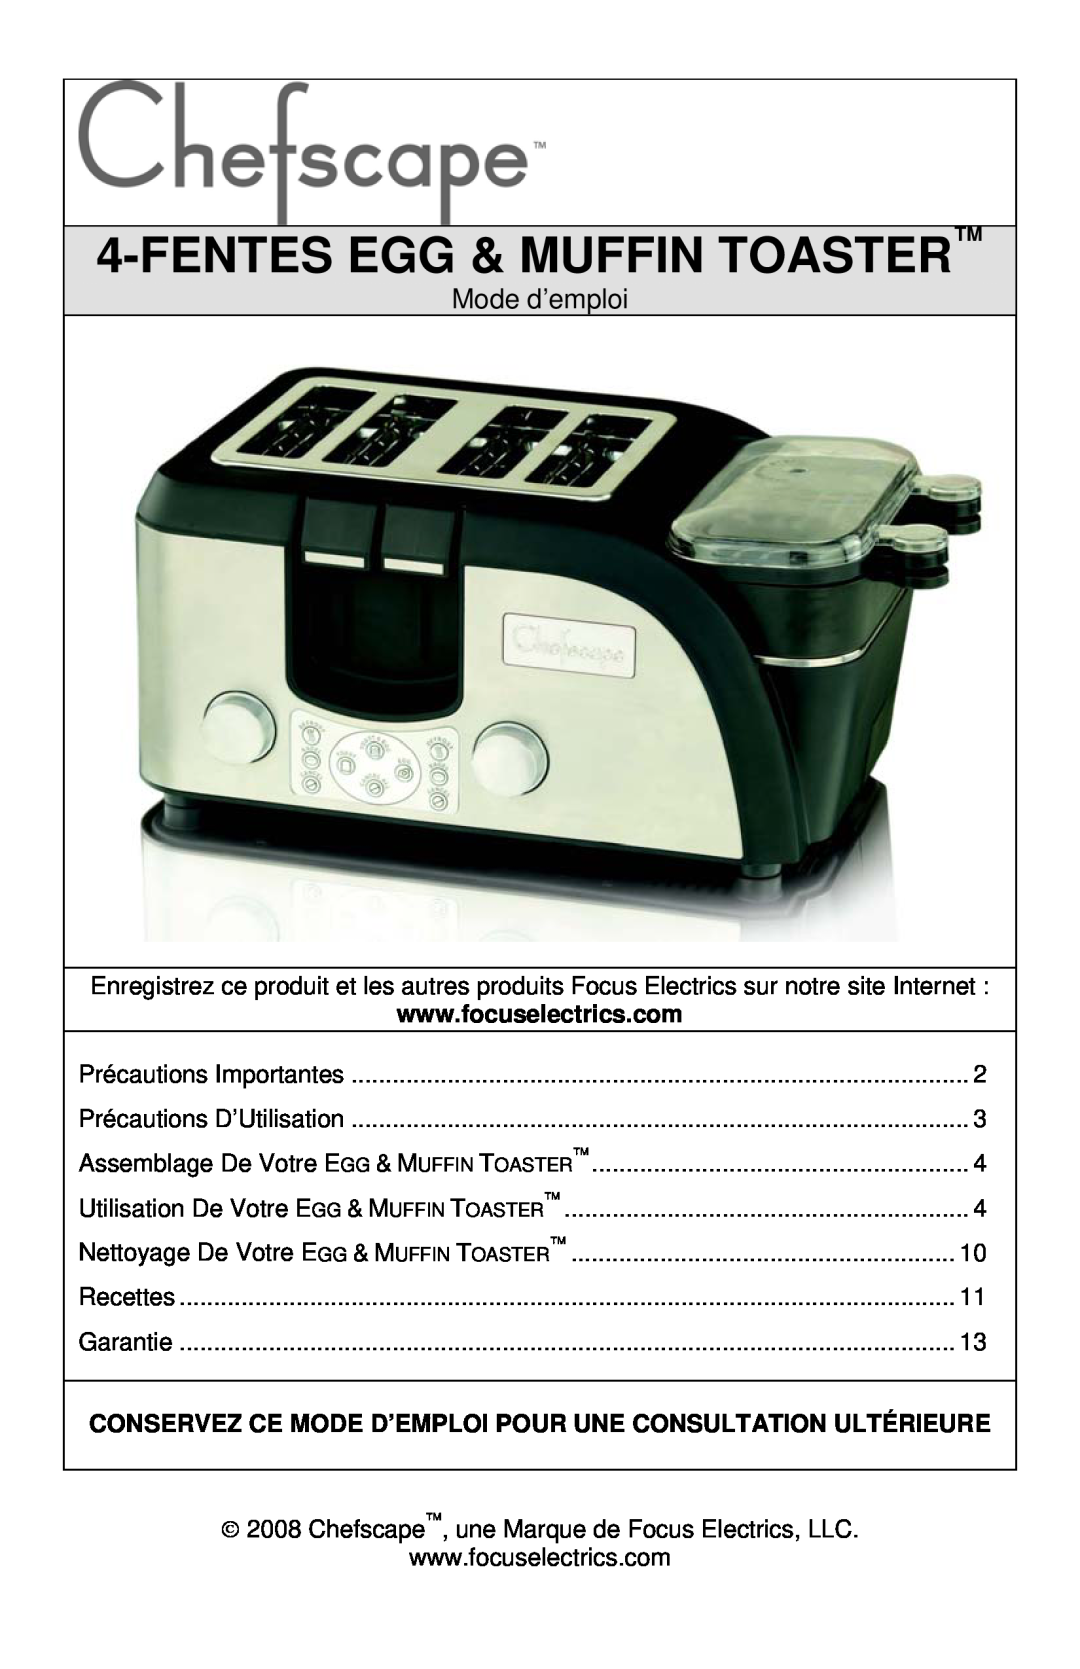 West Bend TEMPR, L5748 instruction manual Fentesegg & Muffin Toaster, Mode d’emploi 